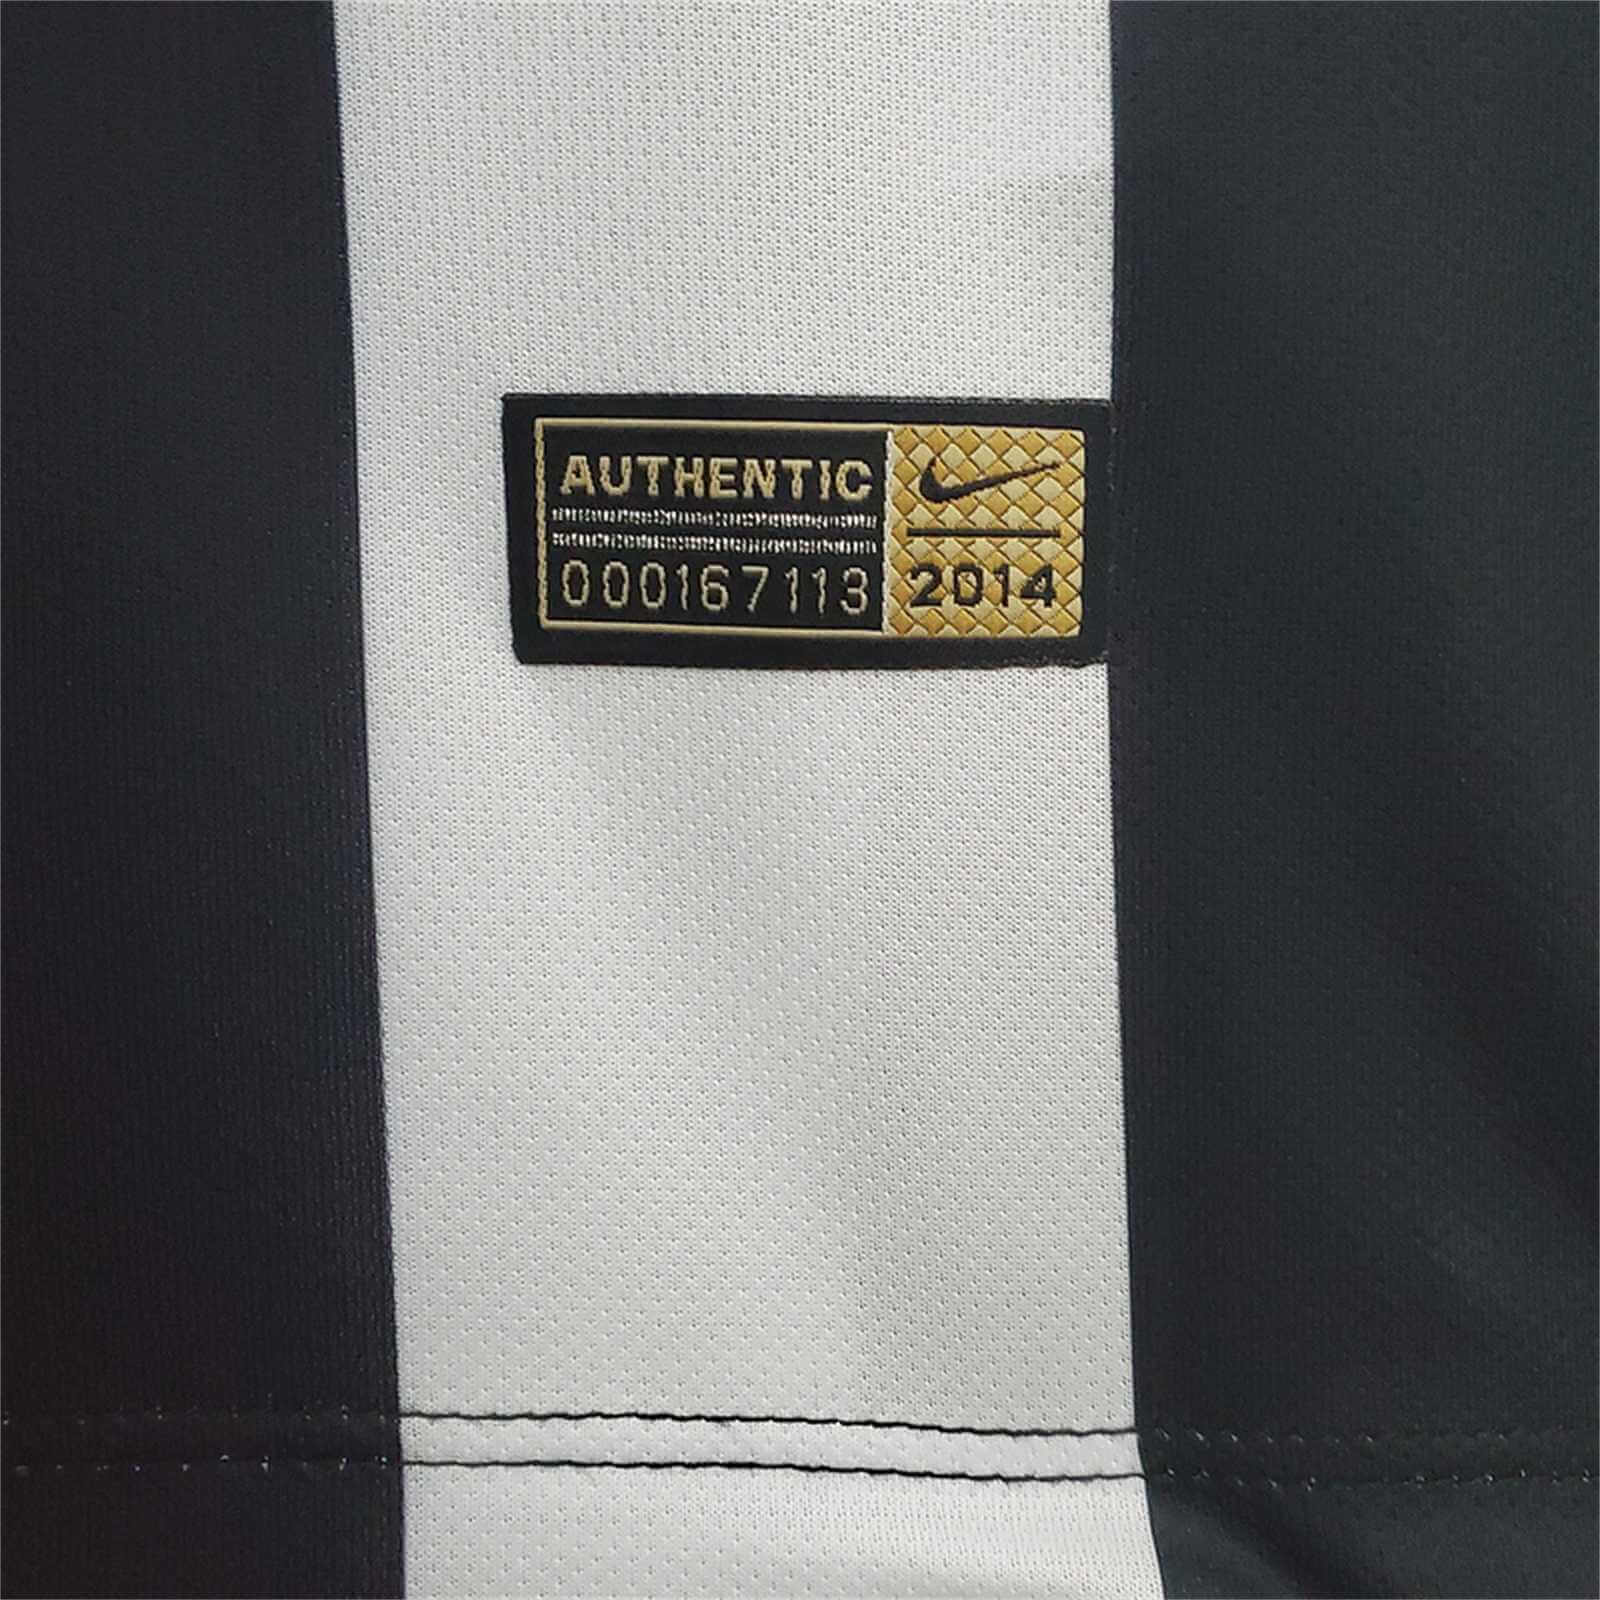 Juventus 2014/2015 Home Kit - The Football Heritage